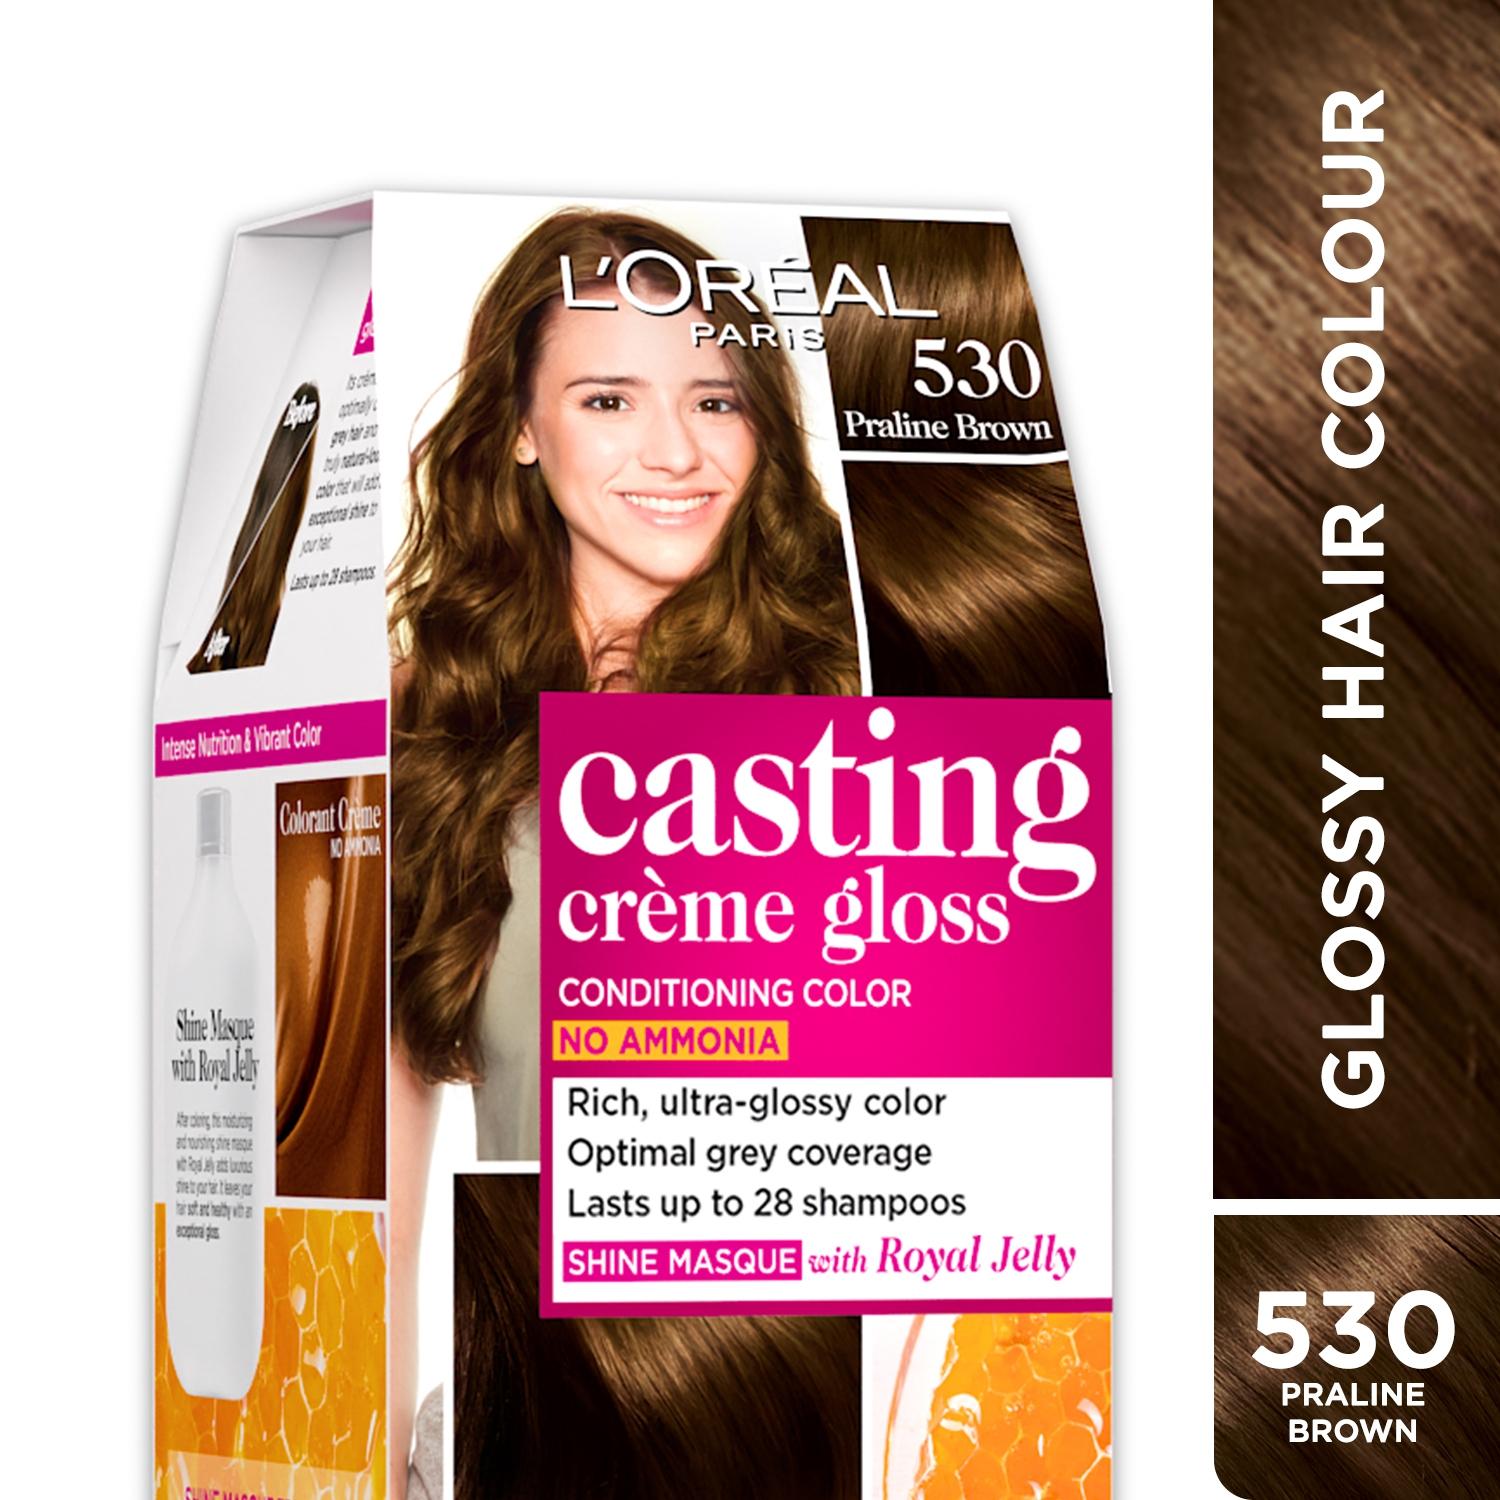 L'Oreal Paris Casting Creme Gloss Hair Color - 530 Praline Brown (87.5g+72ml)